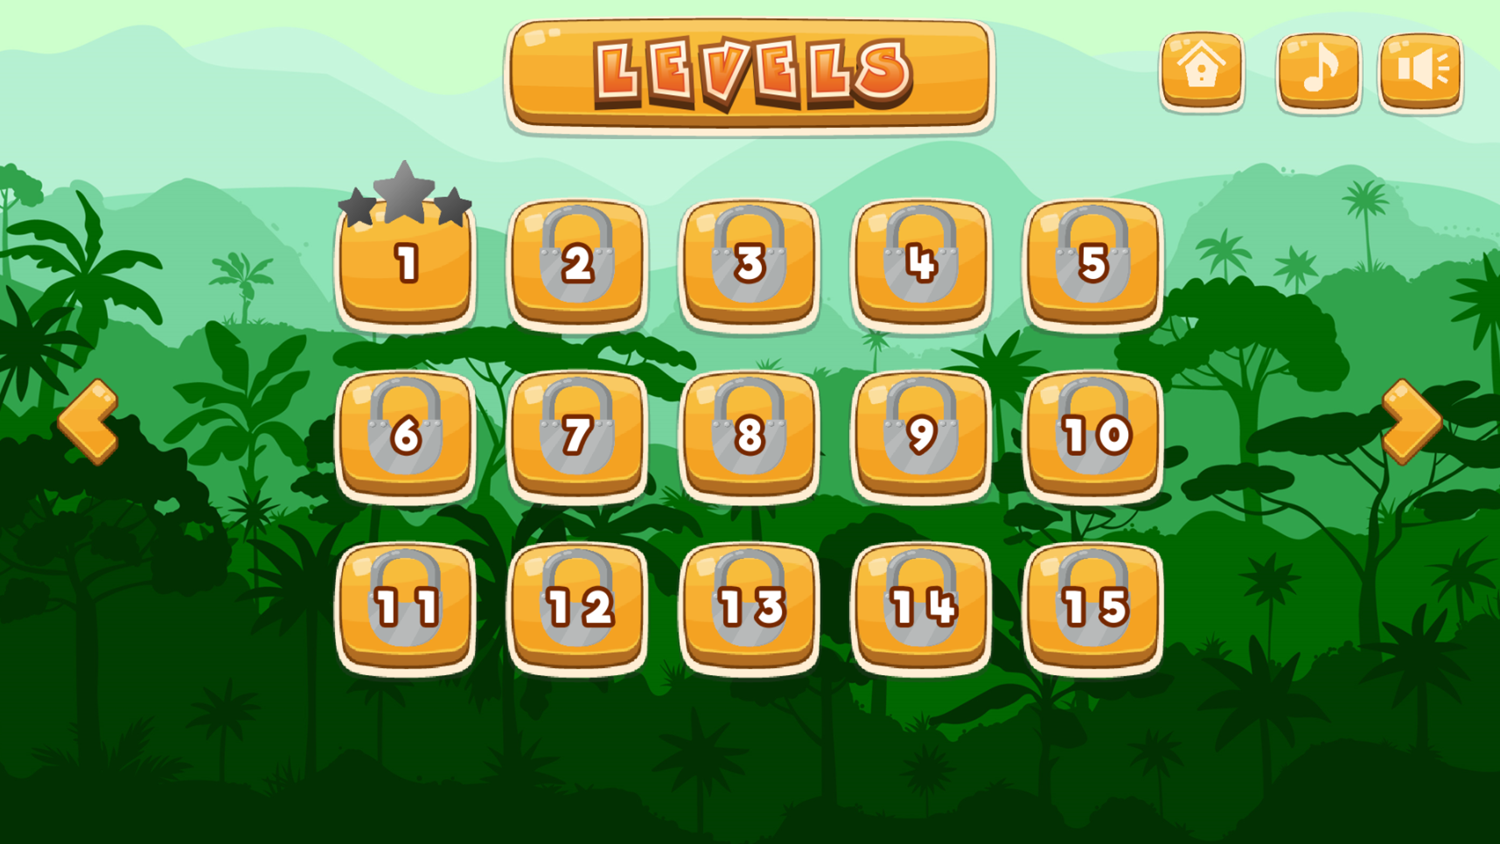 Monkey King Game Levels Select Screenshot.